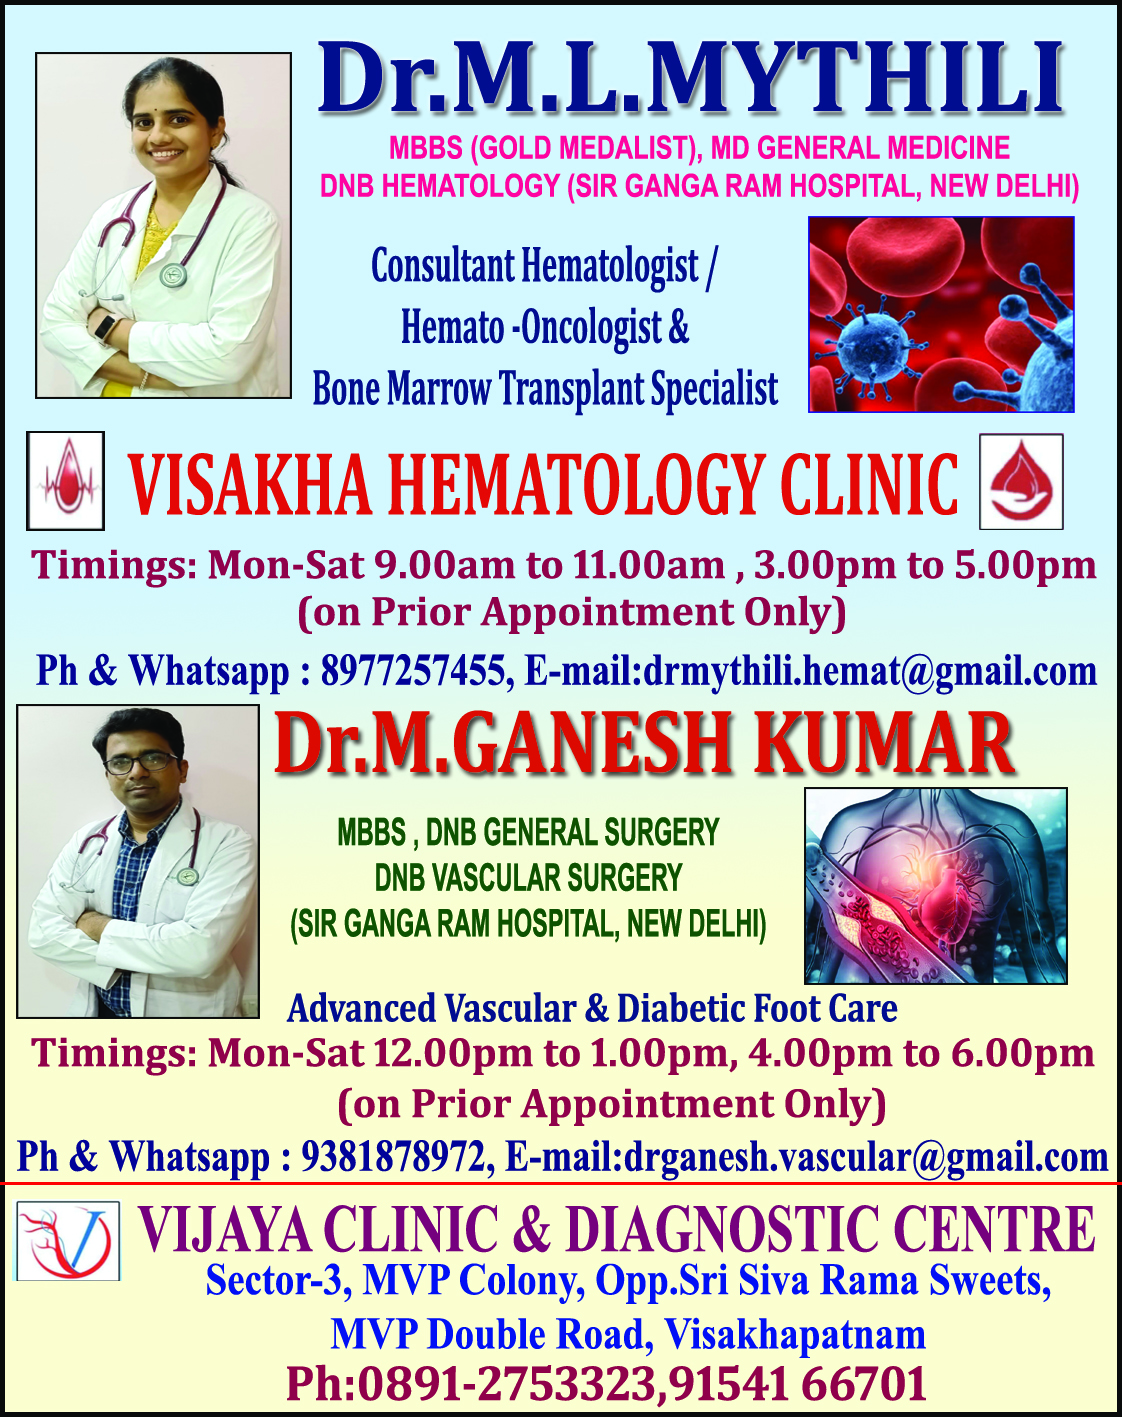 Vijaya clinic & Diagnostic centre 